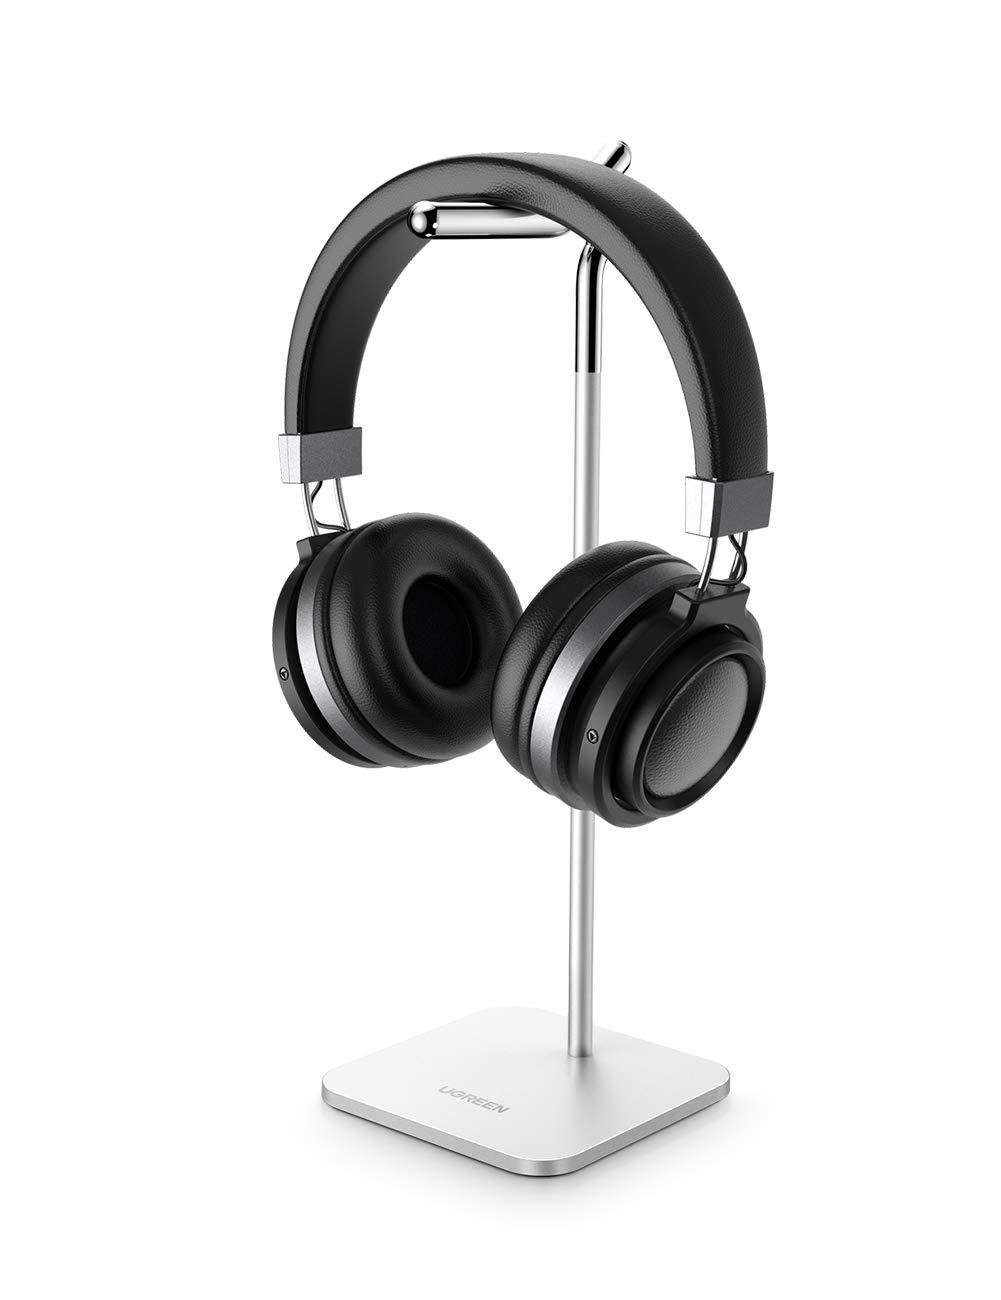 UGREEN Headphone Stand Aluminum Gaming Headset Holder Earphone Hanger Compatible for Sennheiser PXC 550 Sony MDR-1000X Bose QC35 Beats solo3 AKG K612 Audio-Technica